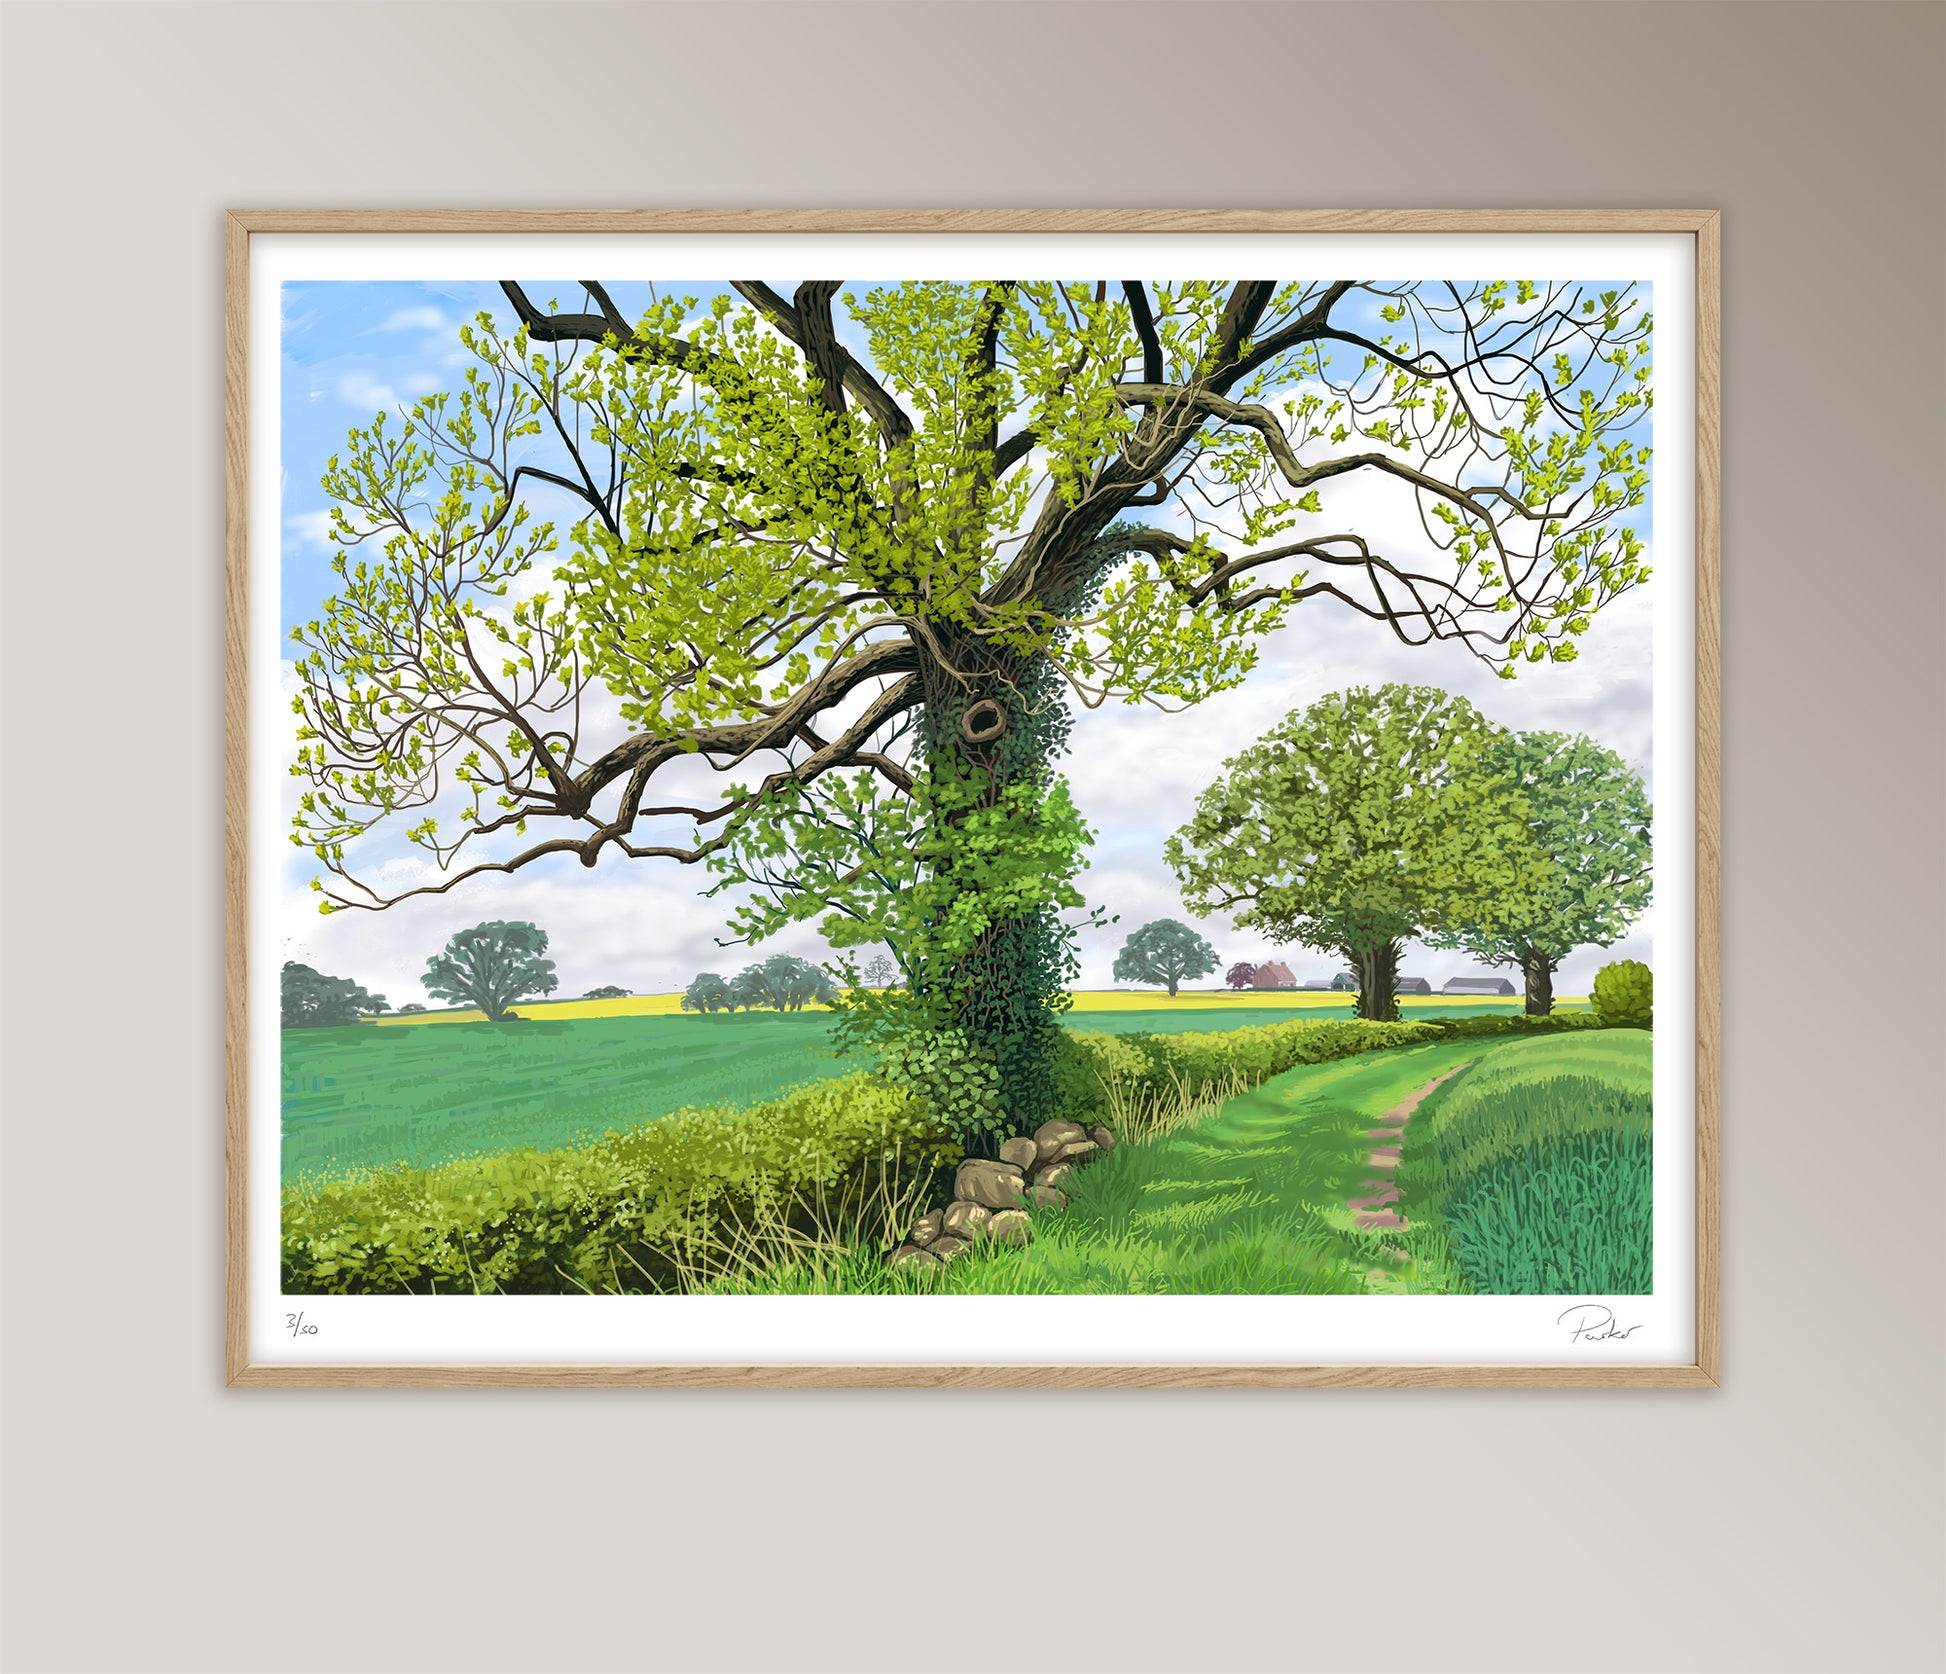 Framed image of May Tree, Farlington in an oak frame. Digital iPad drawing by Jeff Parker